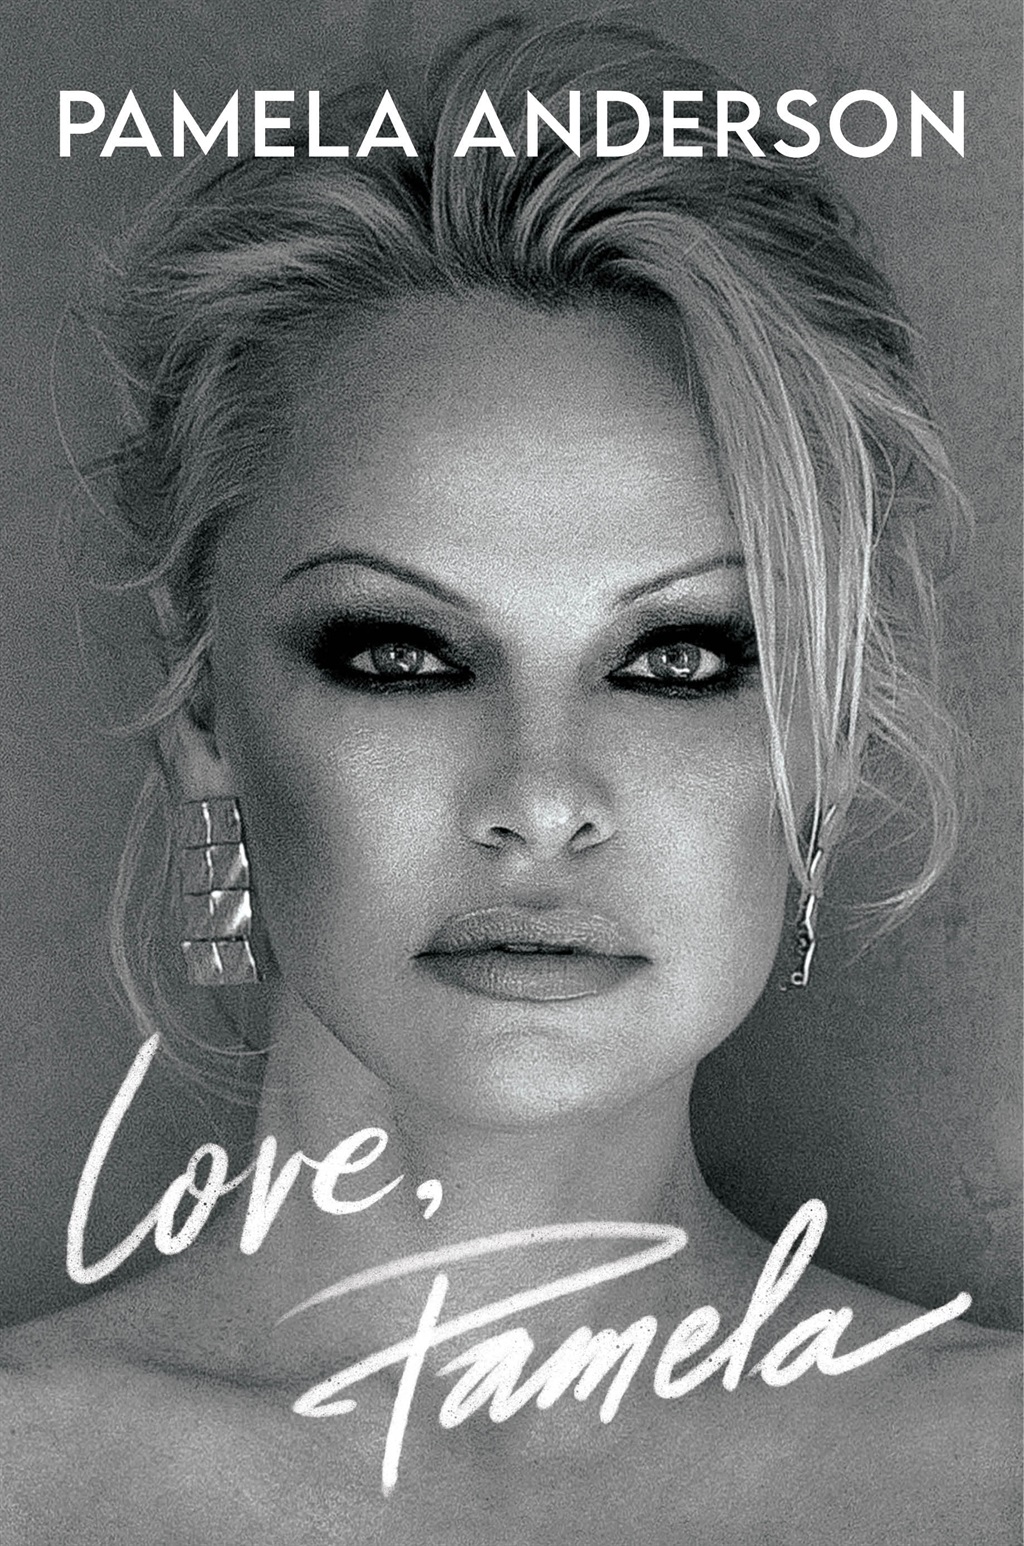 Love, Pamela by Pamela Anderson.